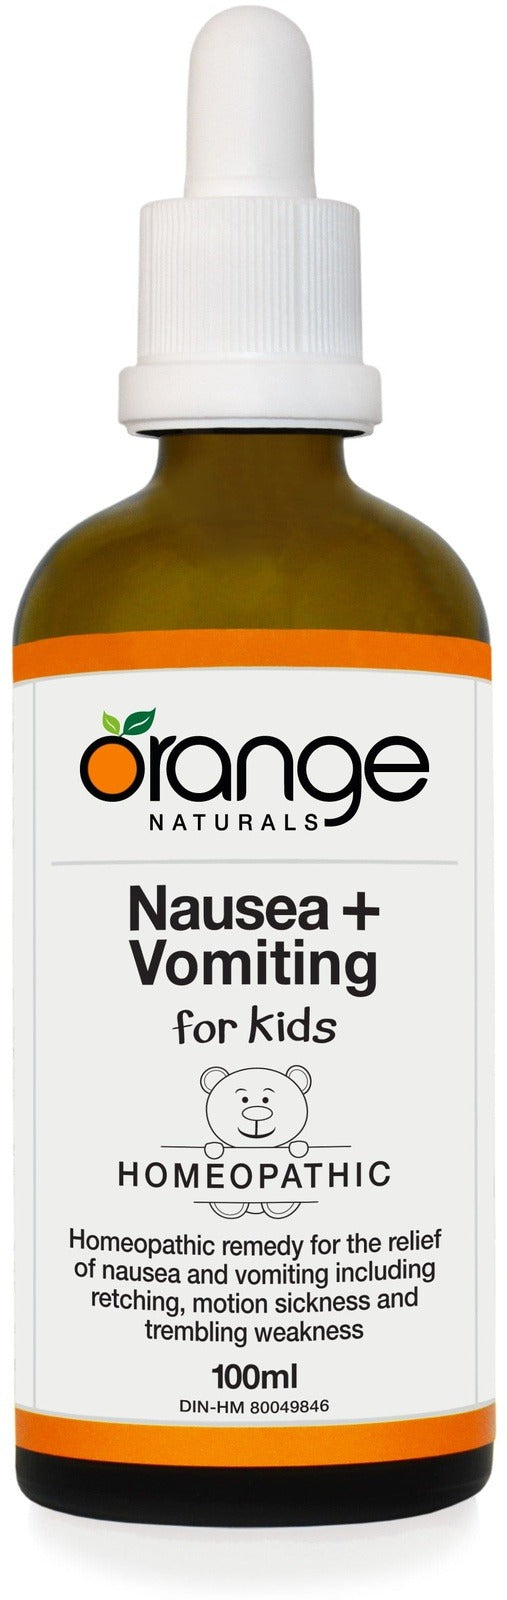 Orange Naturals Homeopathic Nausea + Vomiting for Kids 100 mL Image 1